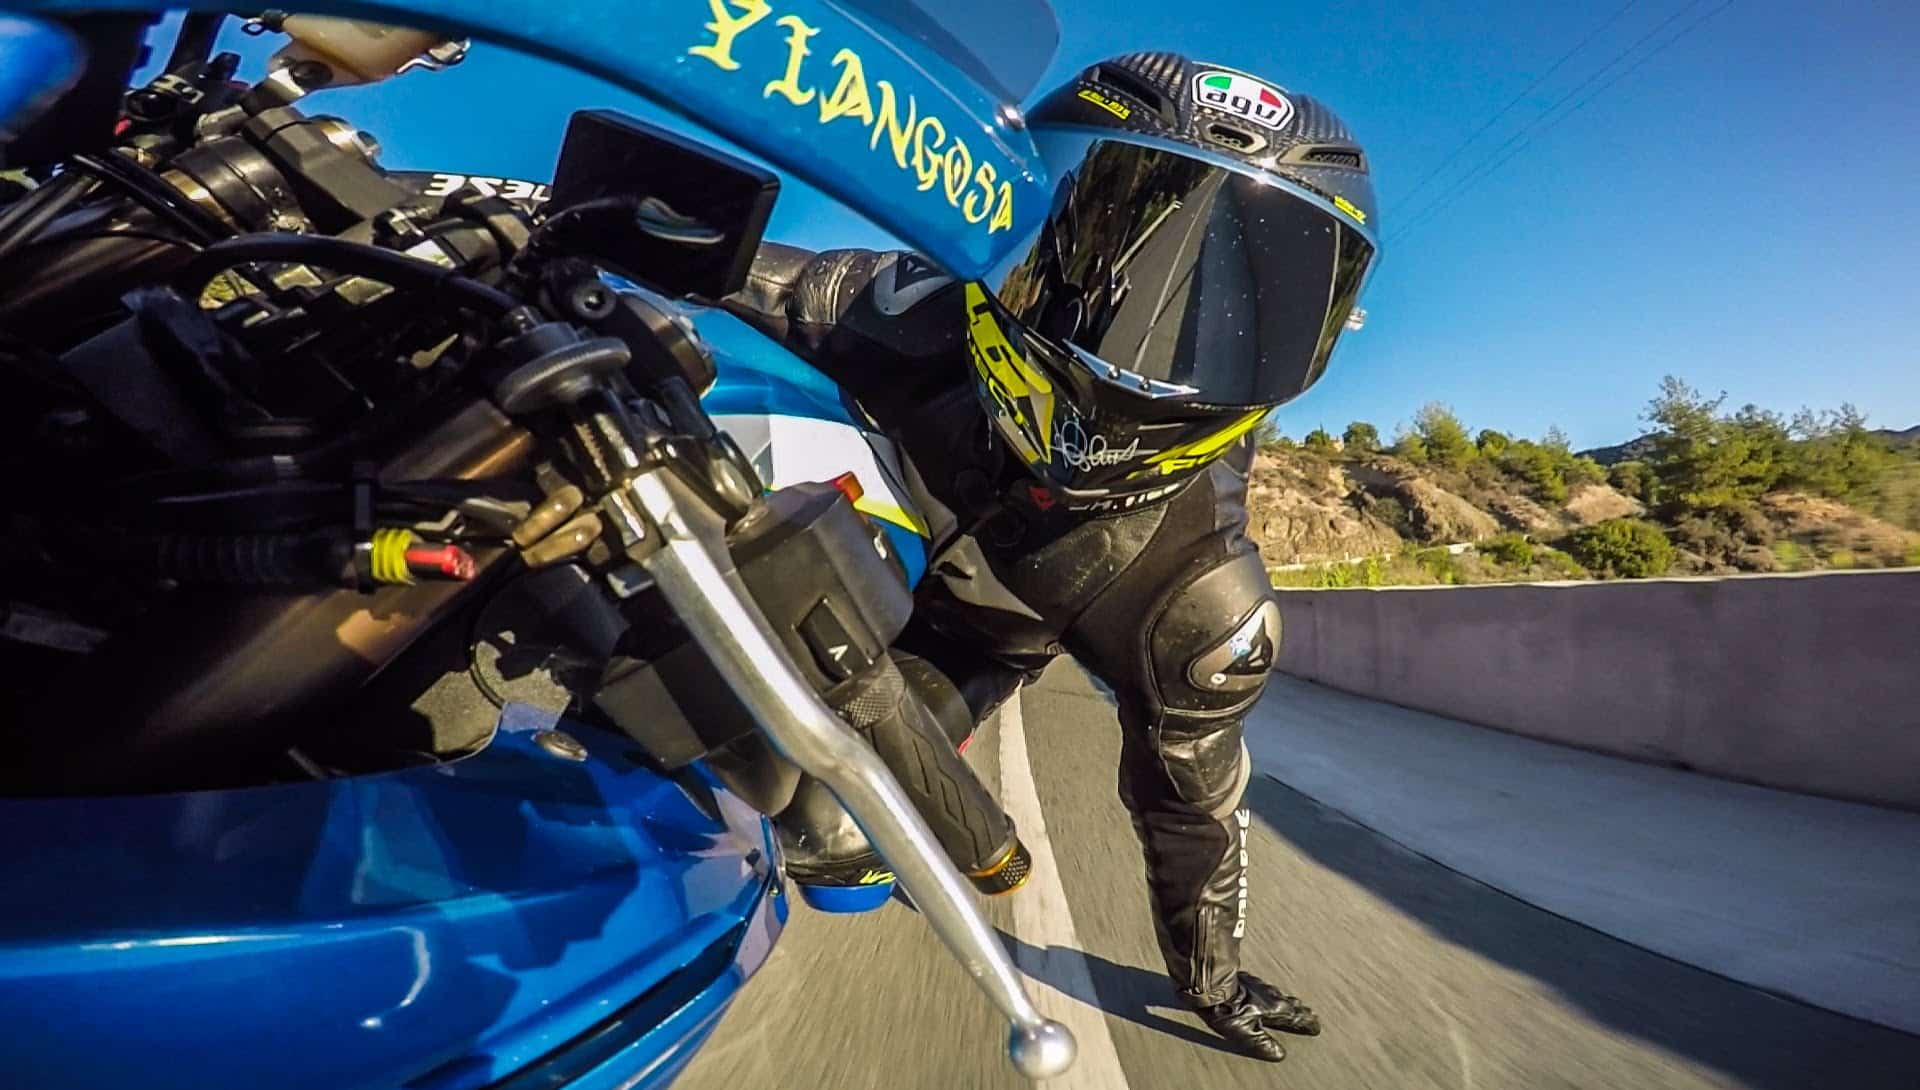 Comment bien filmer en moto avec ma GoPro?